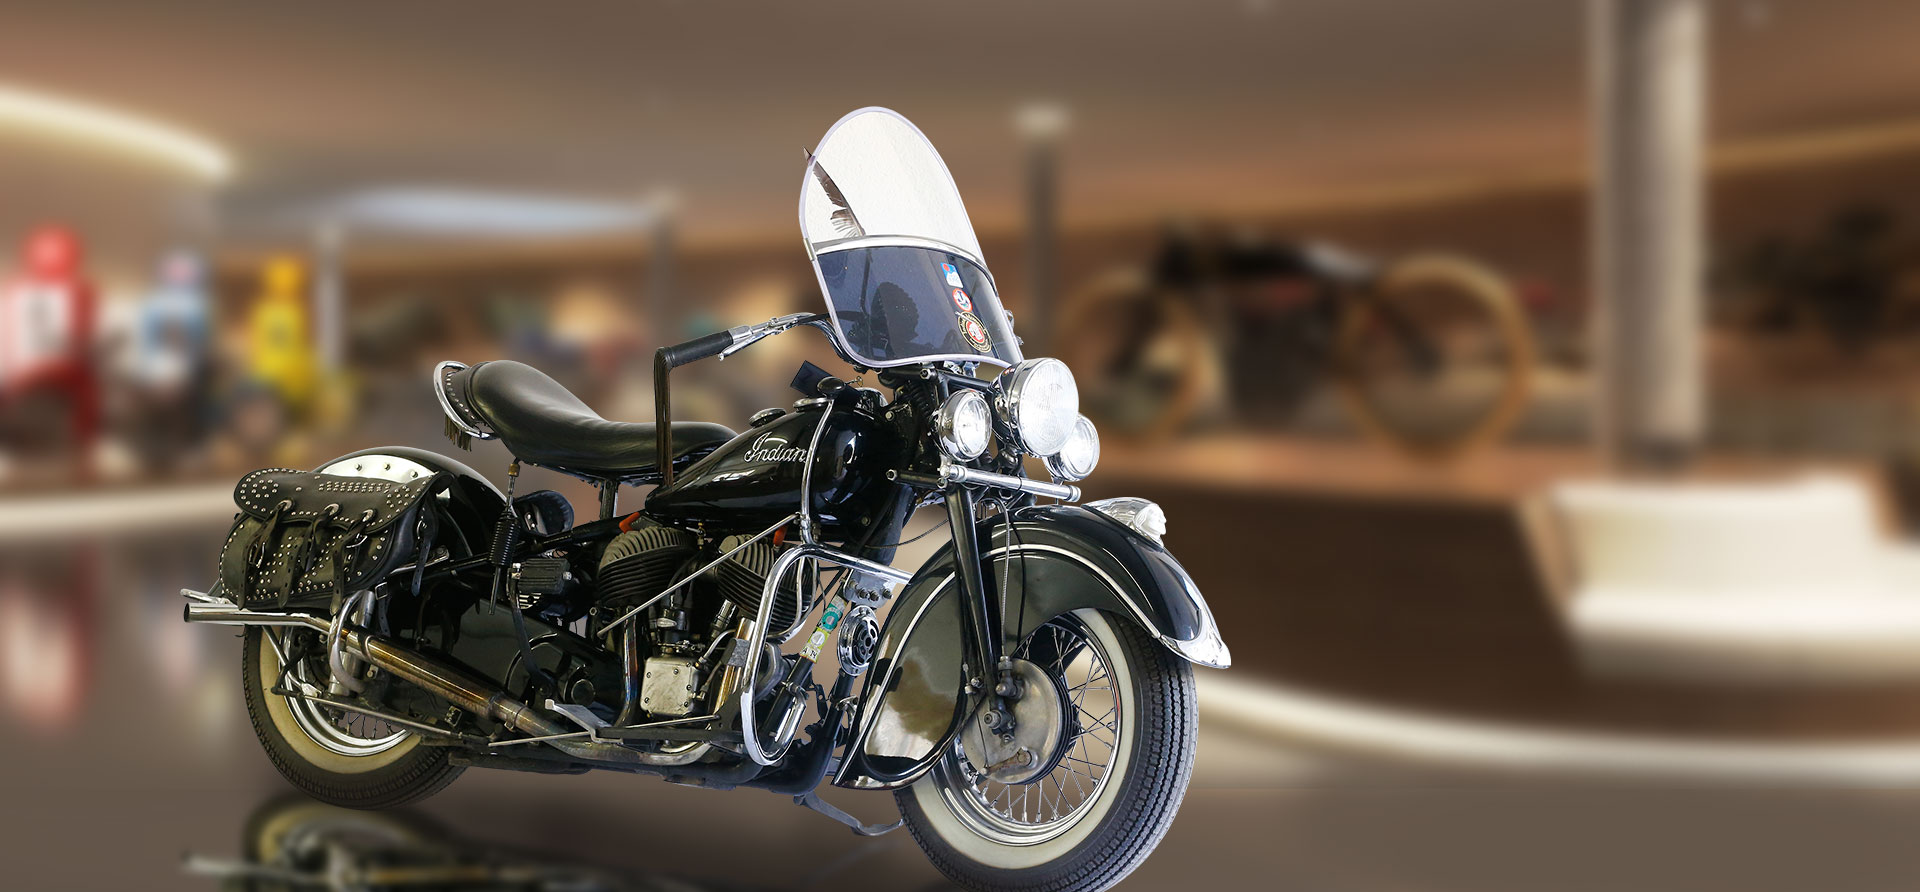 Motorcycle Museum